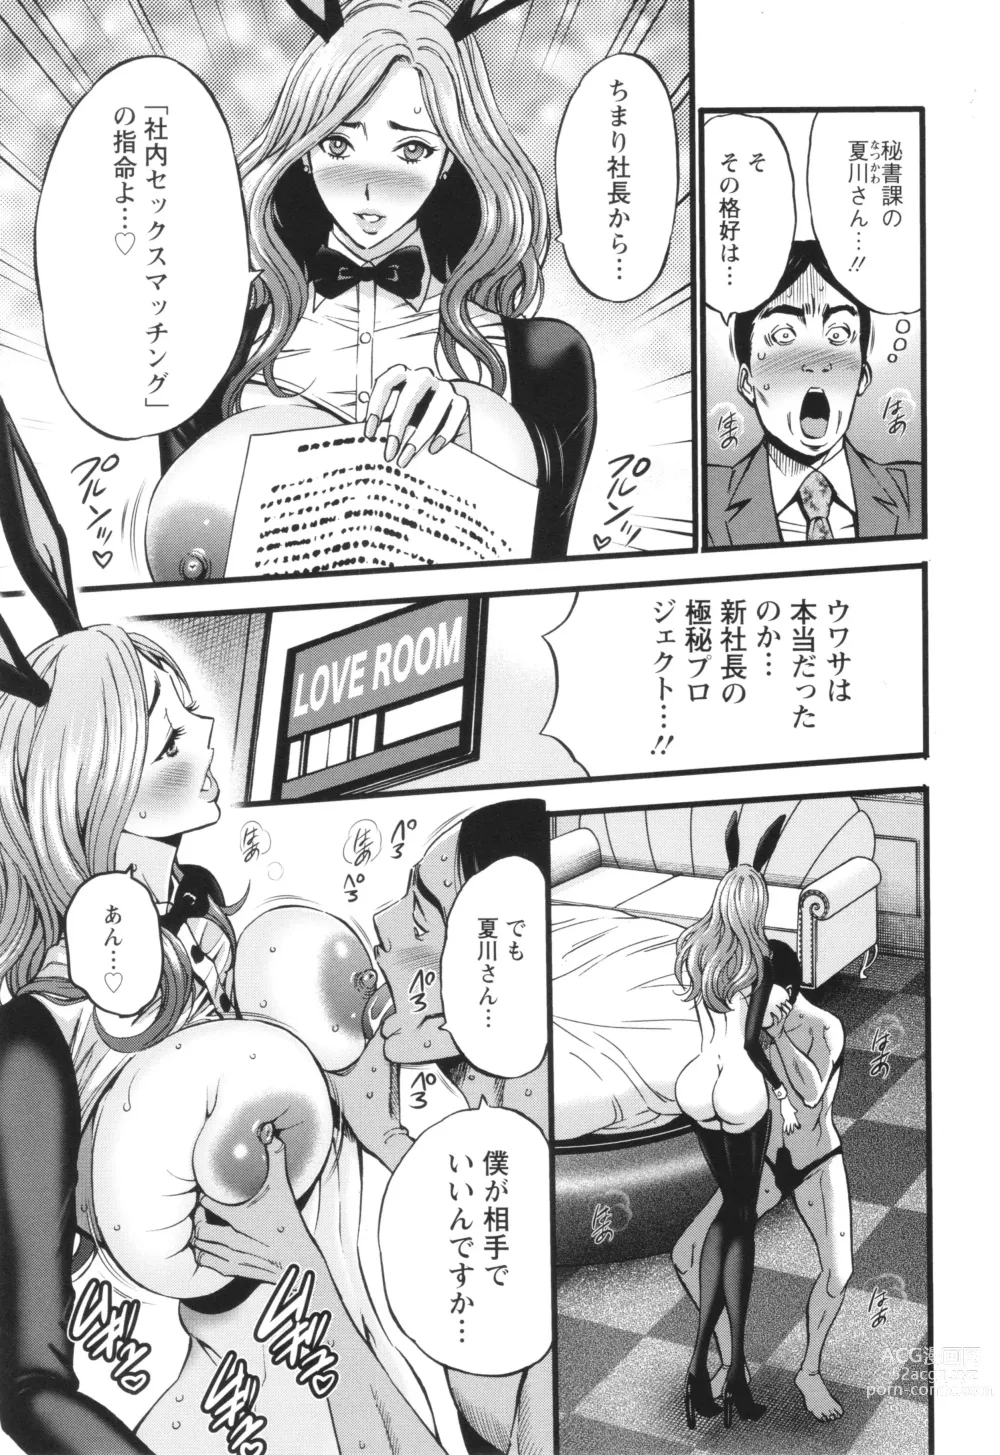 Page 179 of manga Compla Yuruyuru Chimari-san  - Chimaris compliance awareness is very lax.